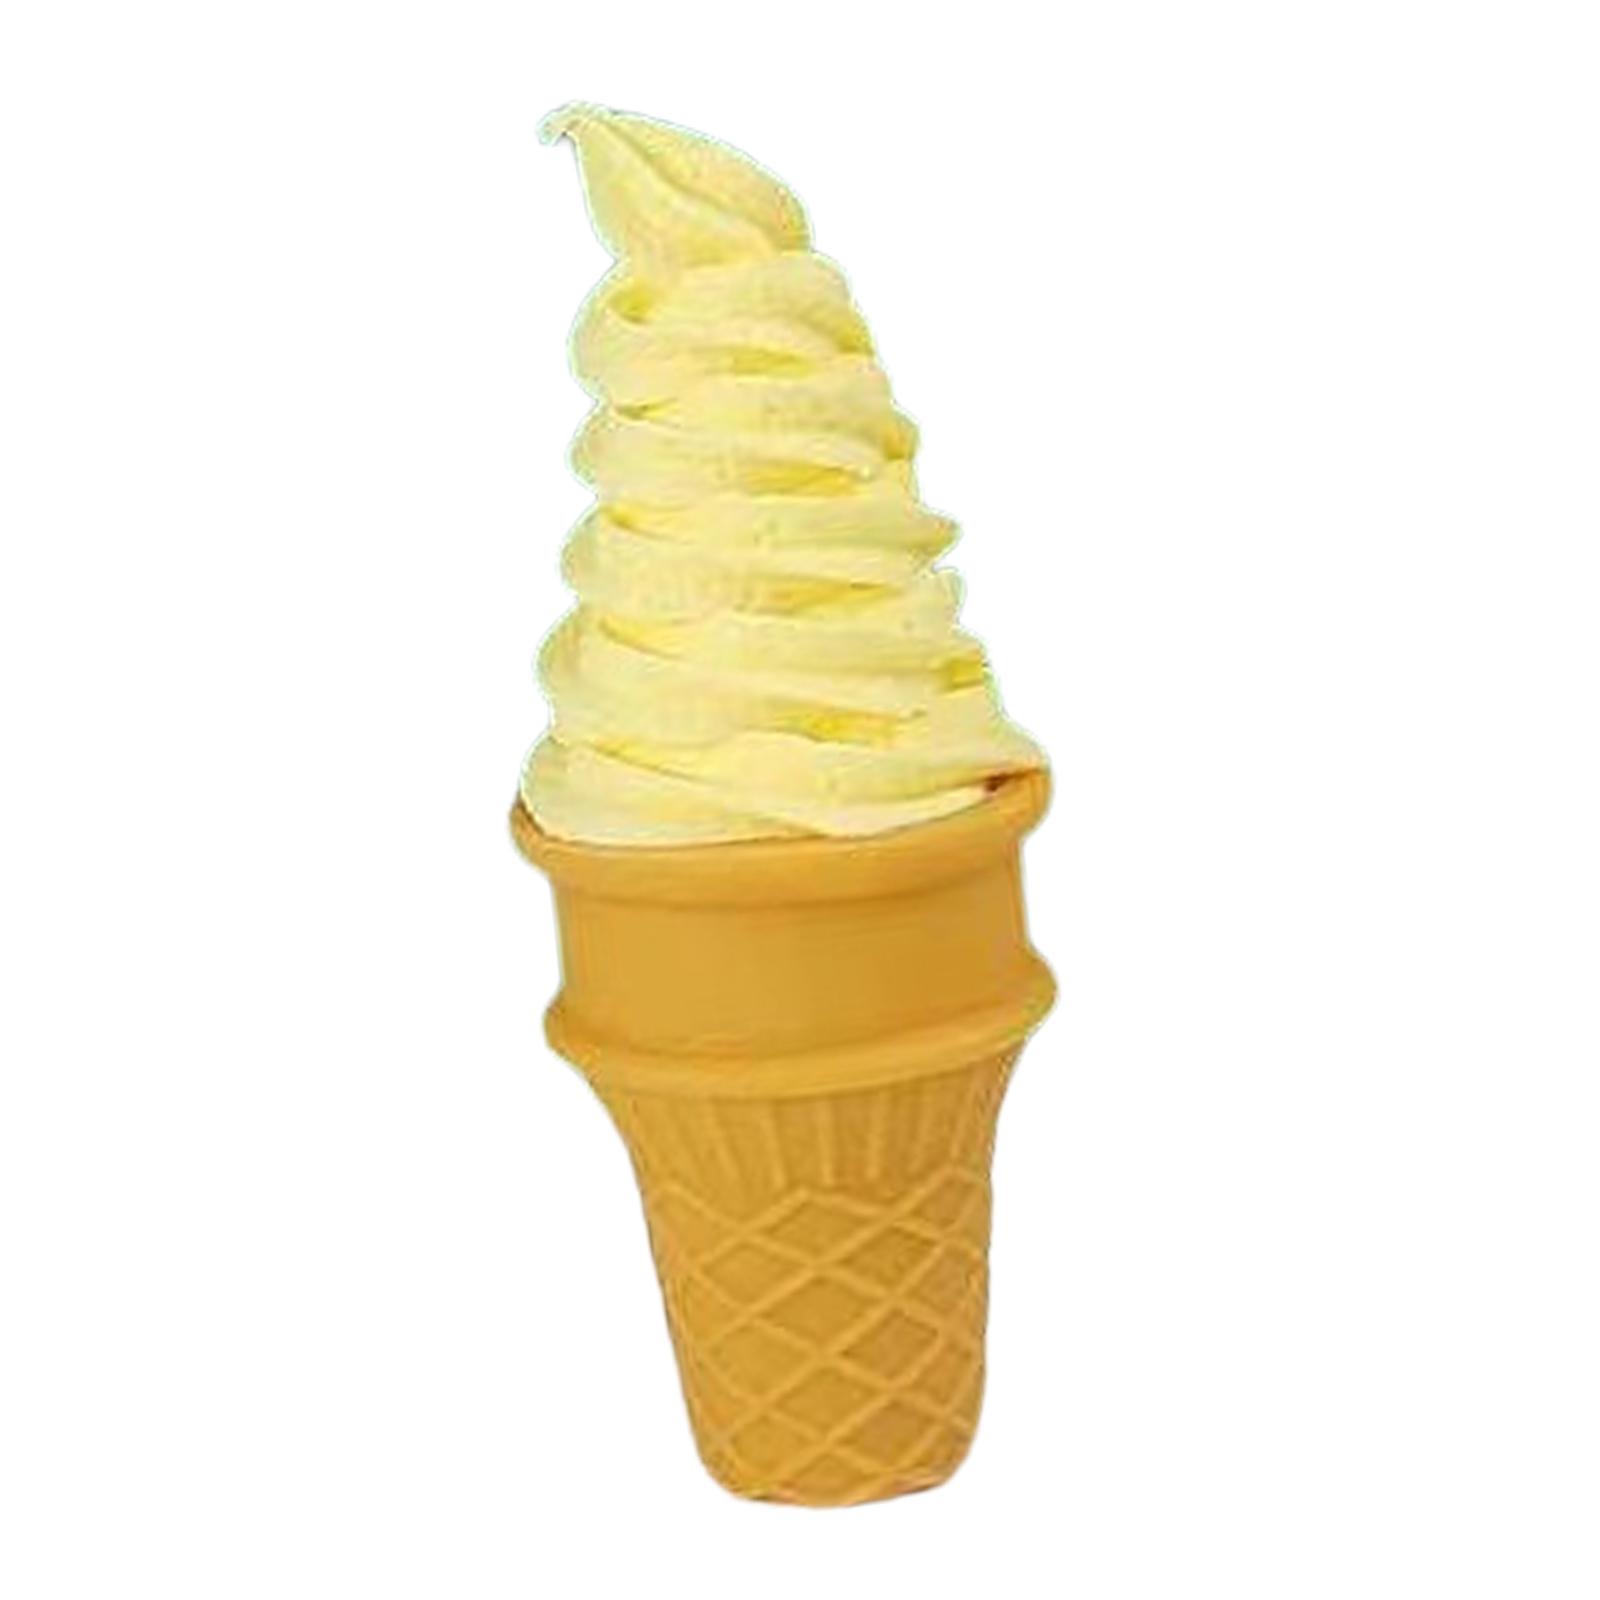 Fake Ice Cream Cone Food Model for Display Dessert Photo Props Desktop Decor Yellow